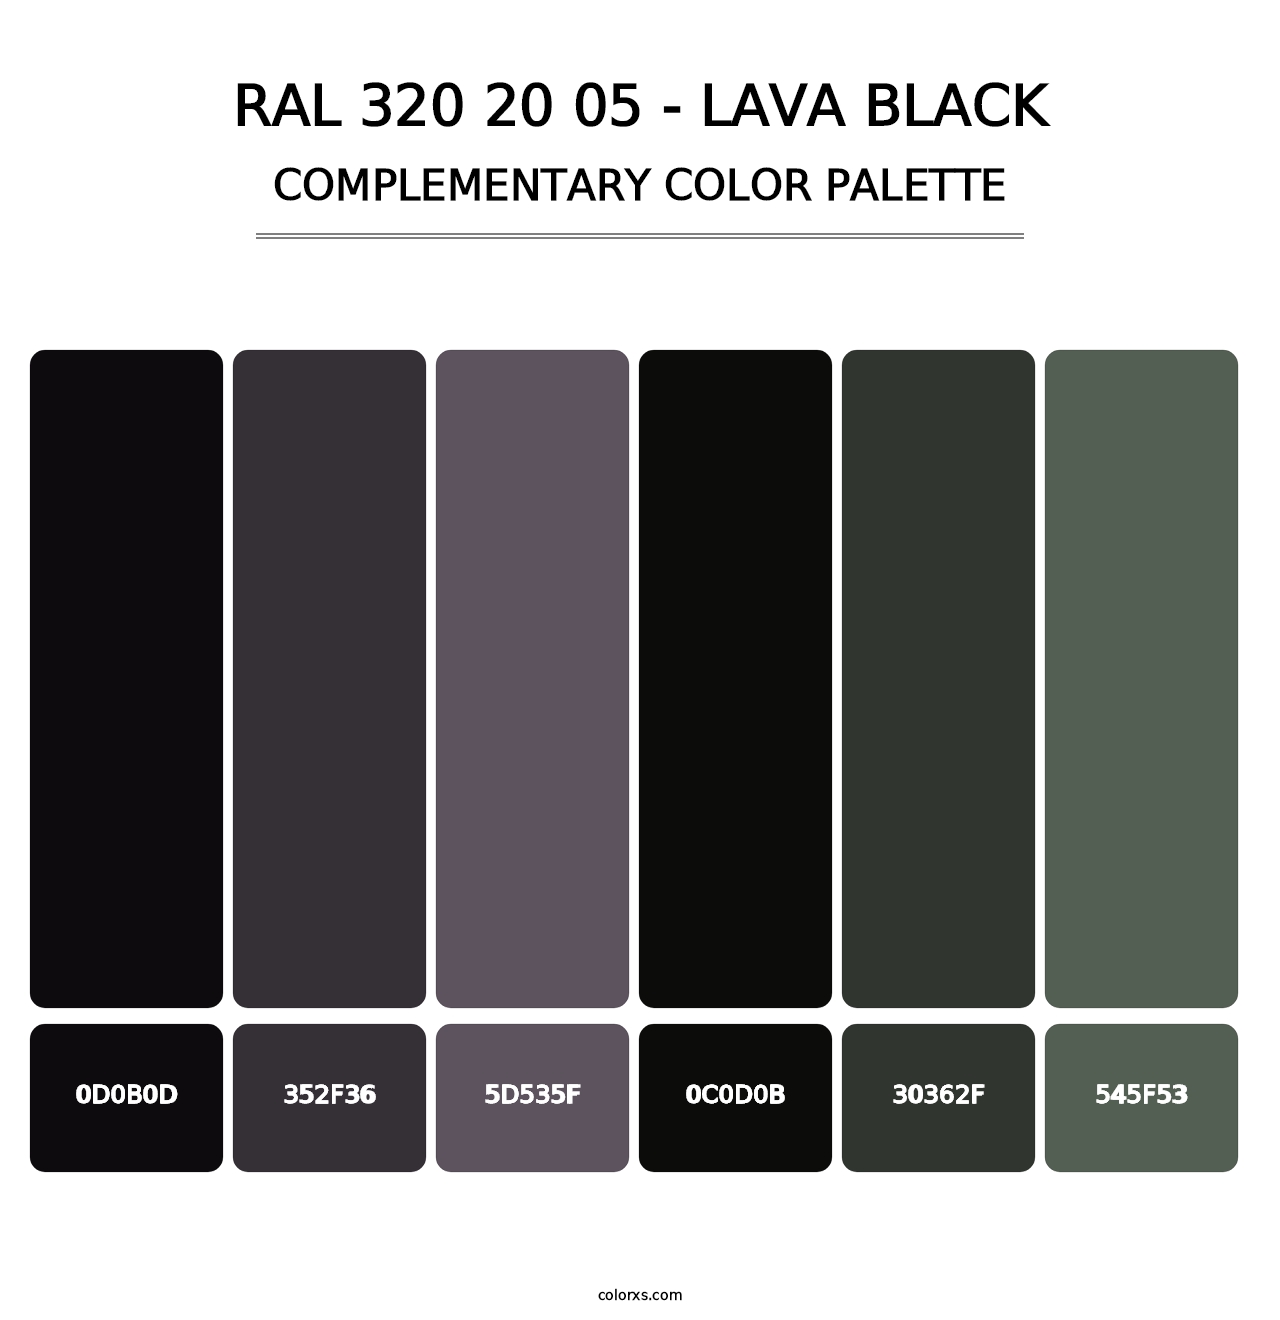 RAL 320 20 05 - Lava Black - Complementary Color Palette